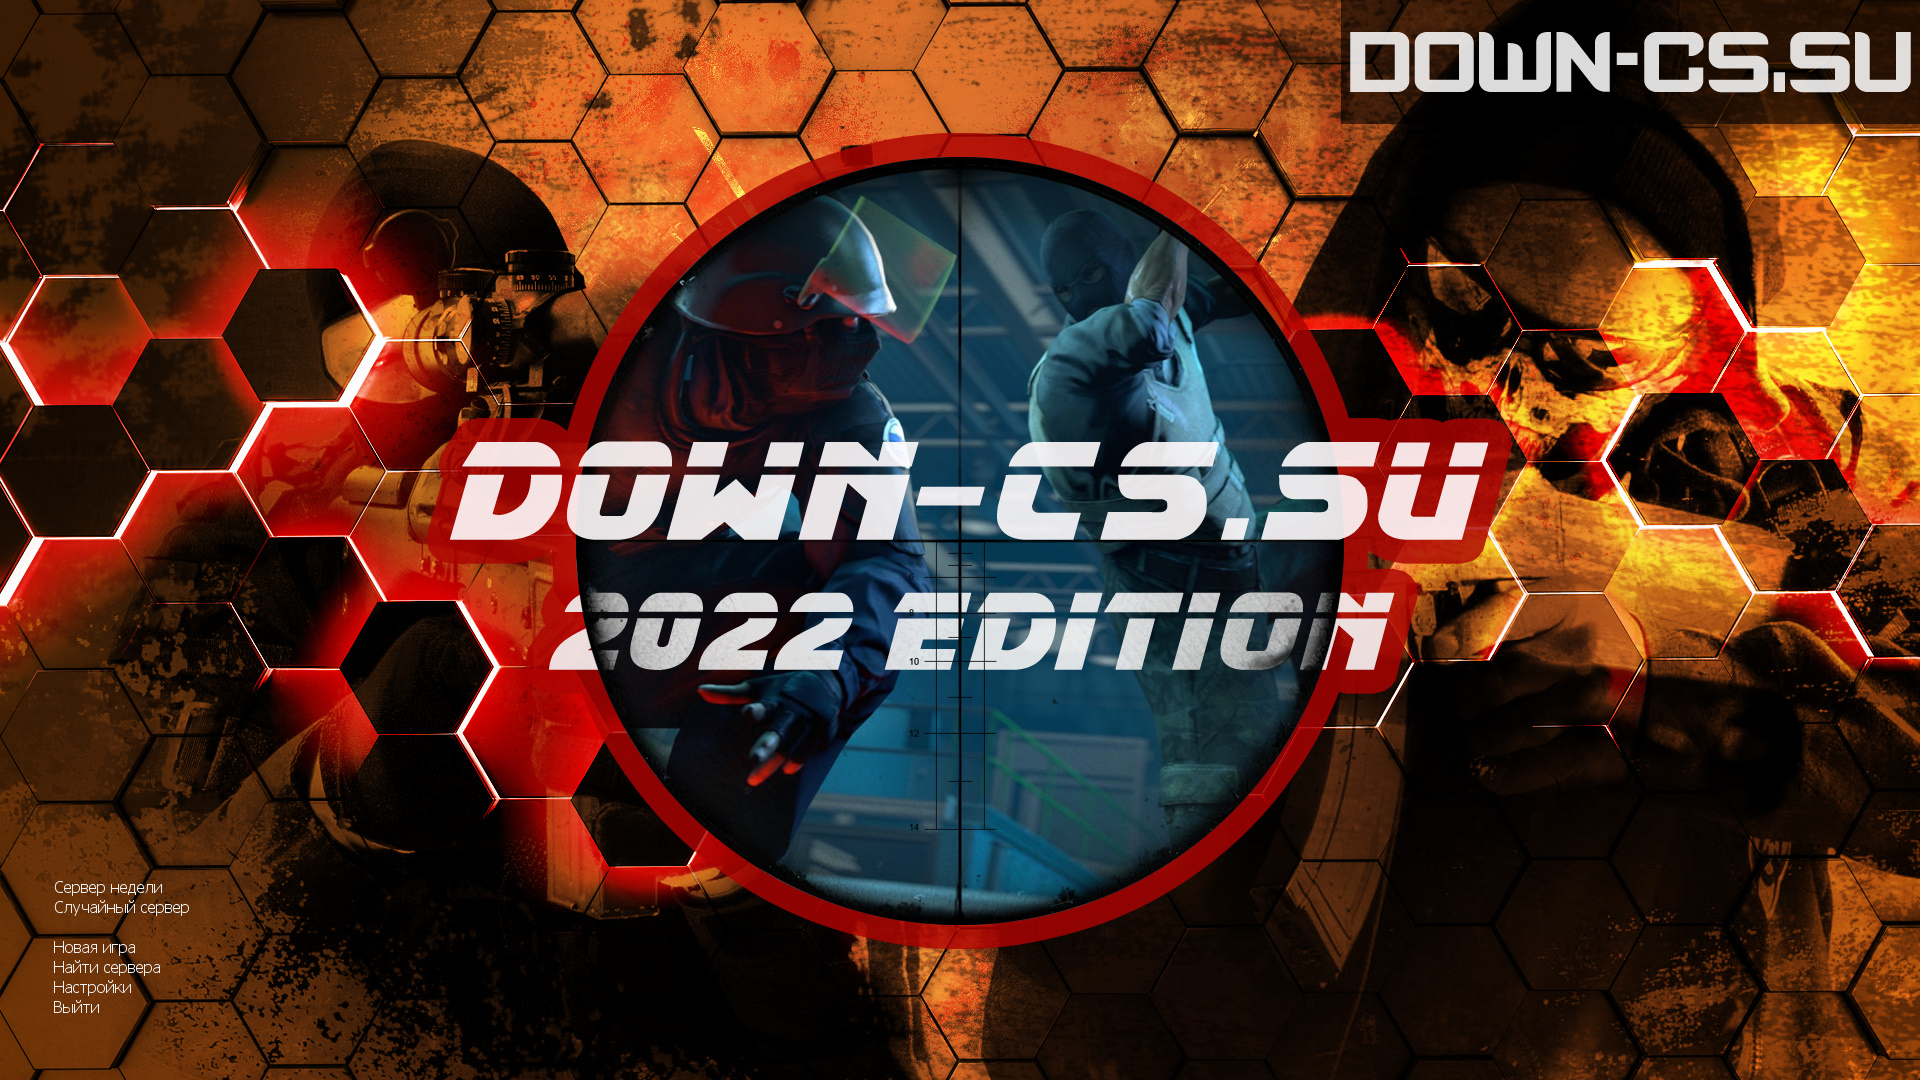 Download CS 1.6 2022 Edition